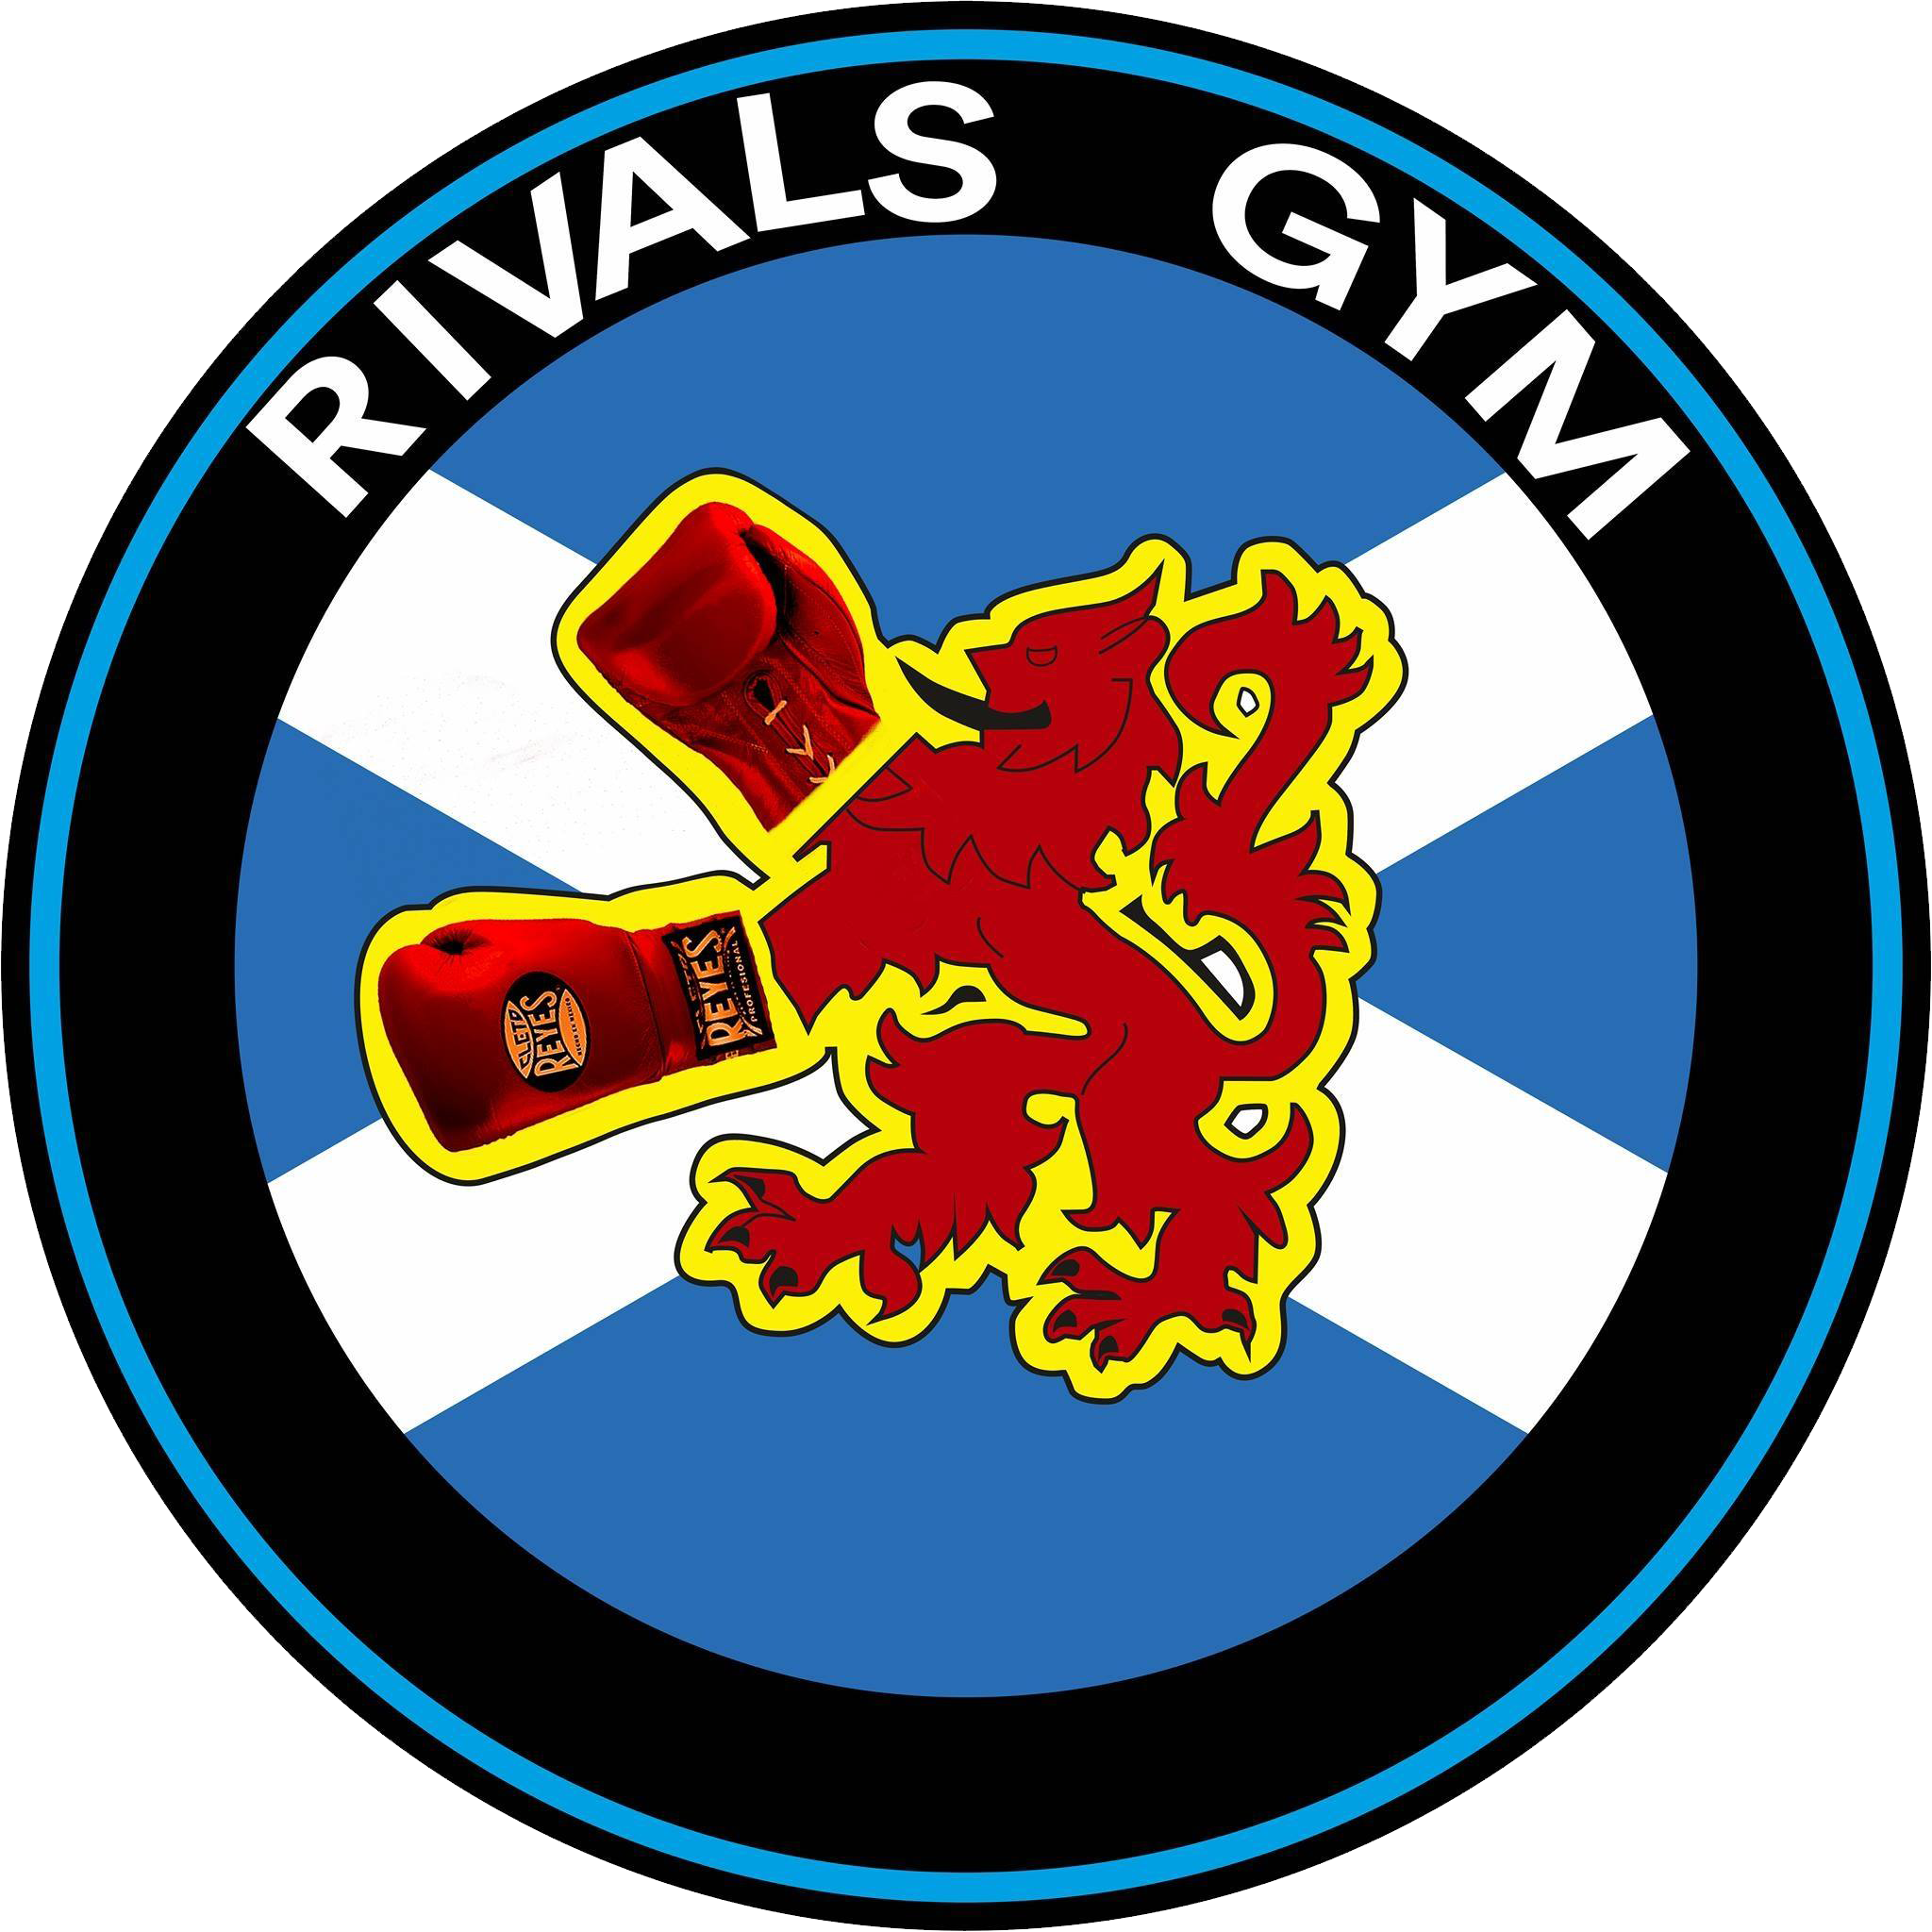 Rivals Gym